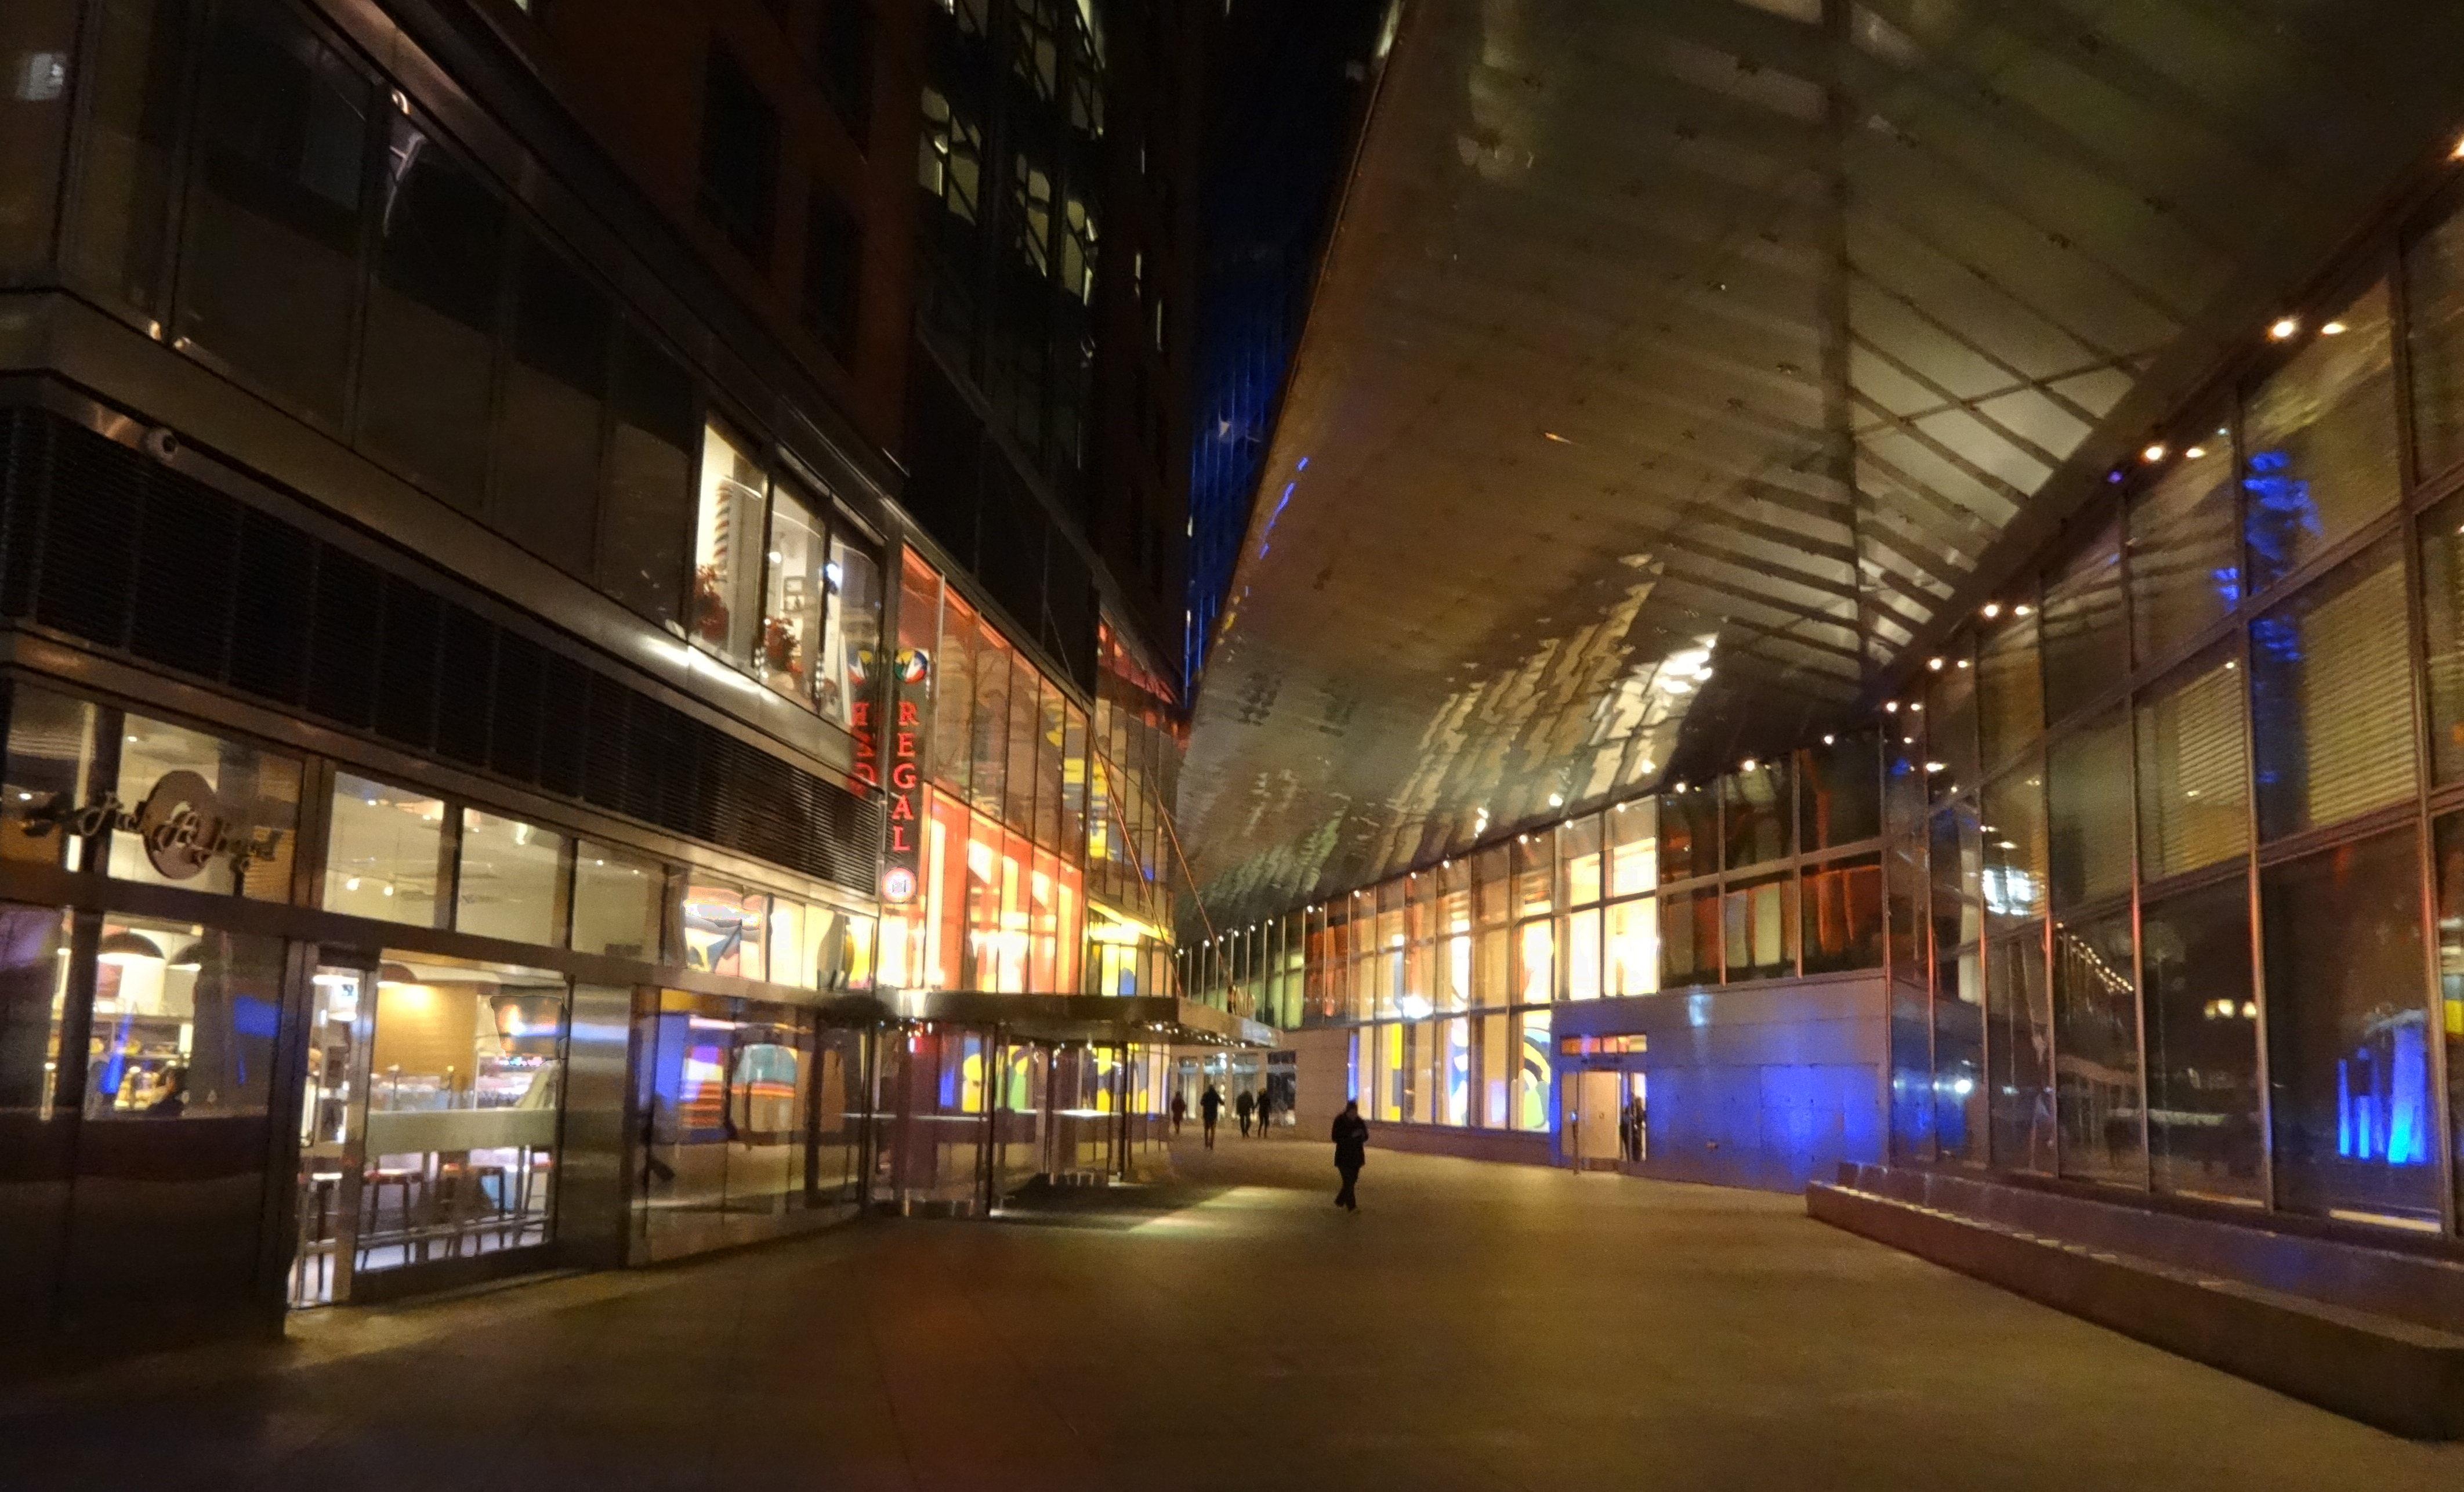 Goldman alley 12-26-2013